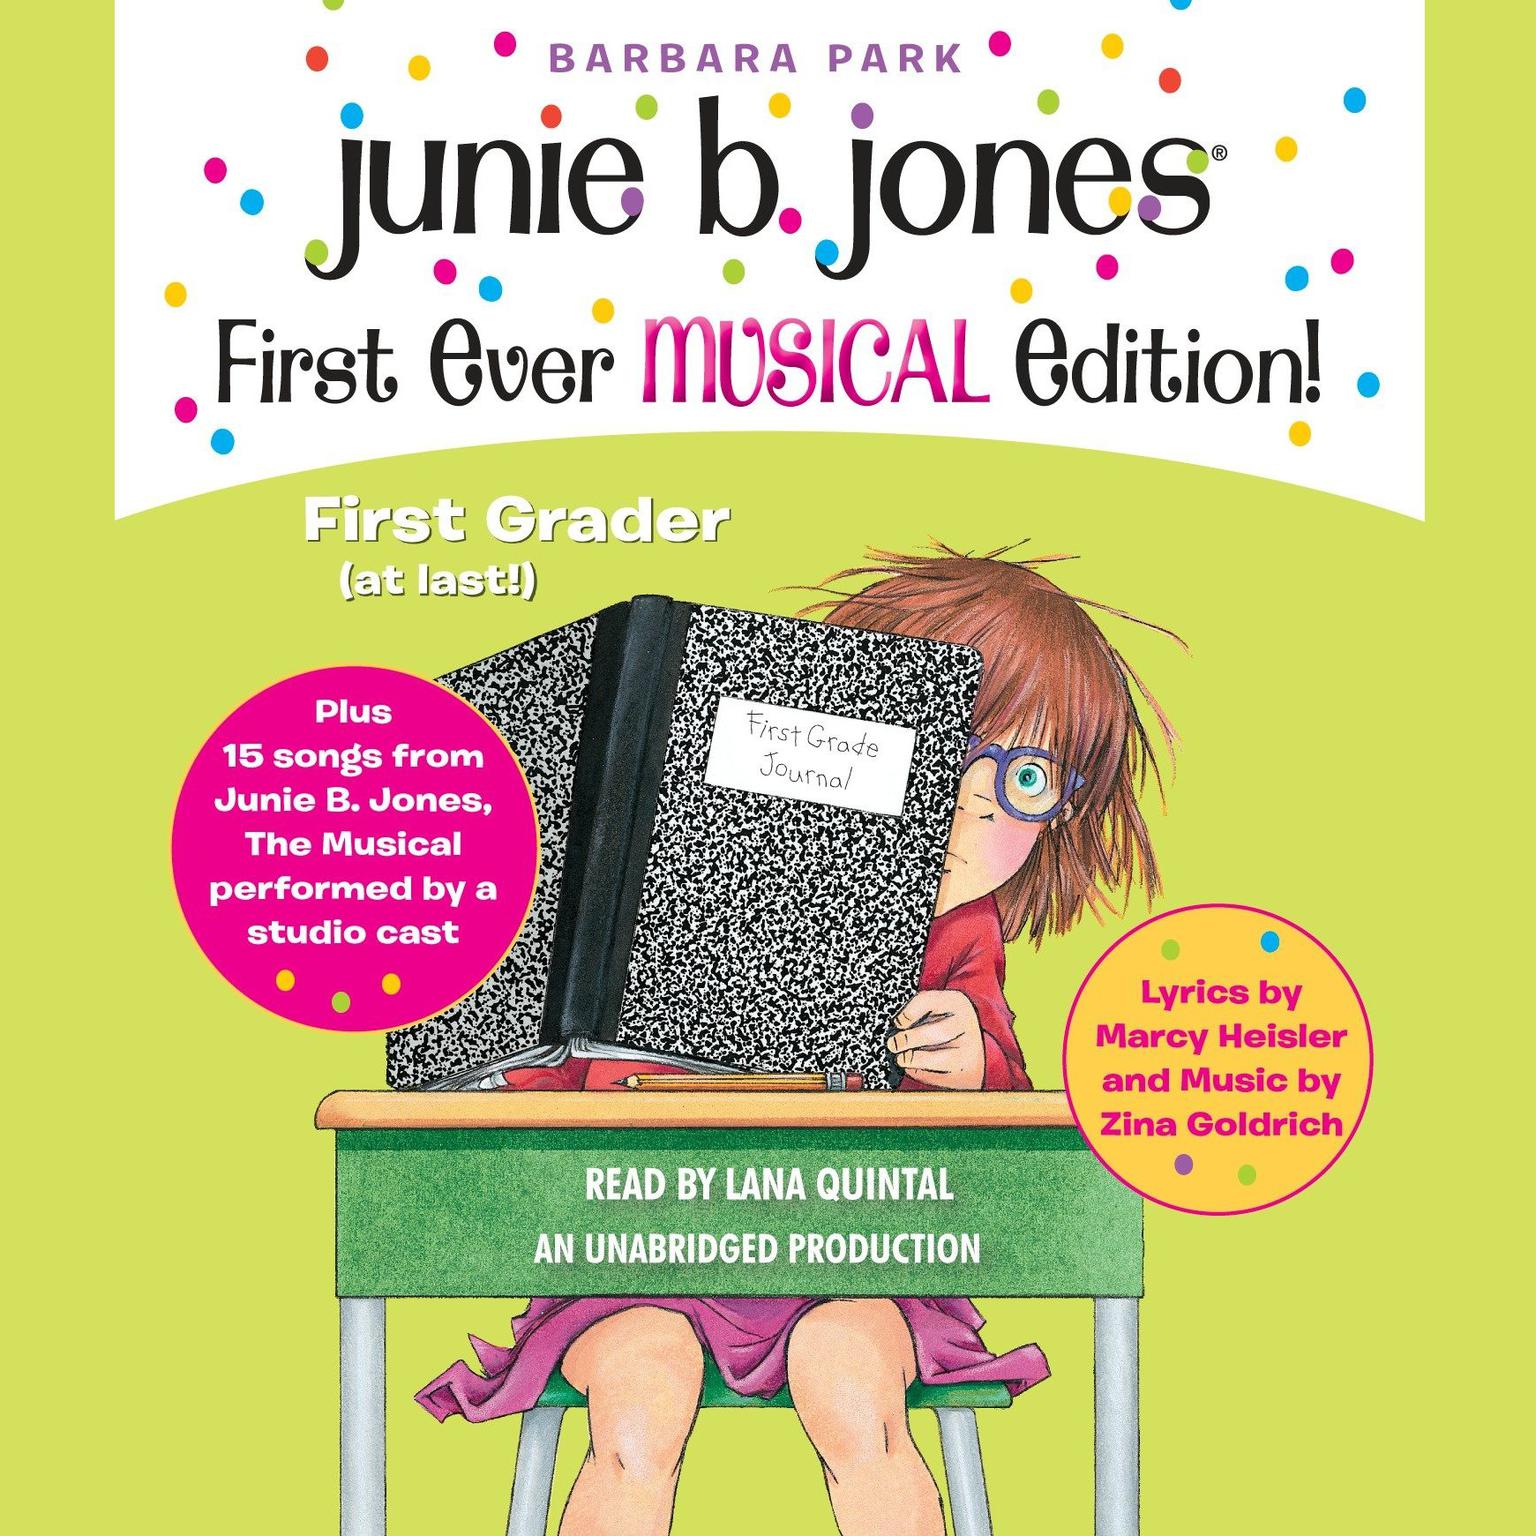 Junie B. Jones First Ever MUSICAL Edition!: Junie B., First Grader (at last!) Audiobook plus 15 Songs from Junie B. Jones The Musical Audiobook, by Barbara Park